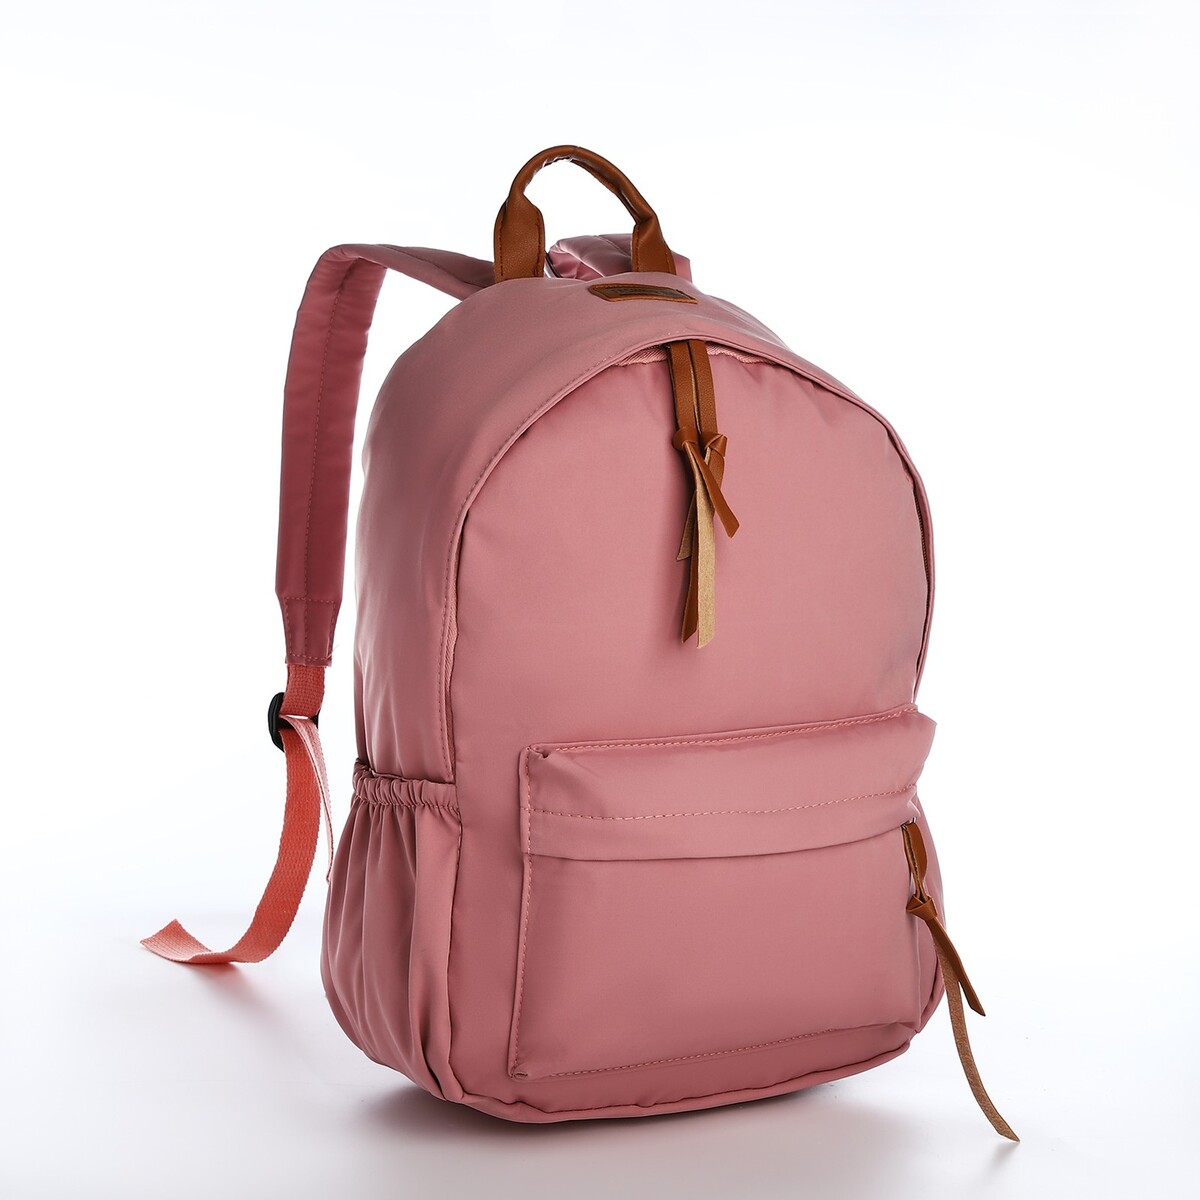 Рюкзак молодежный из текстиля на молнии, 4 кармана, цвет розовый рюкзак молодежный из текстиля 4 кармана белый розовый